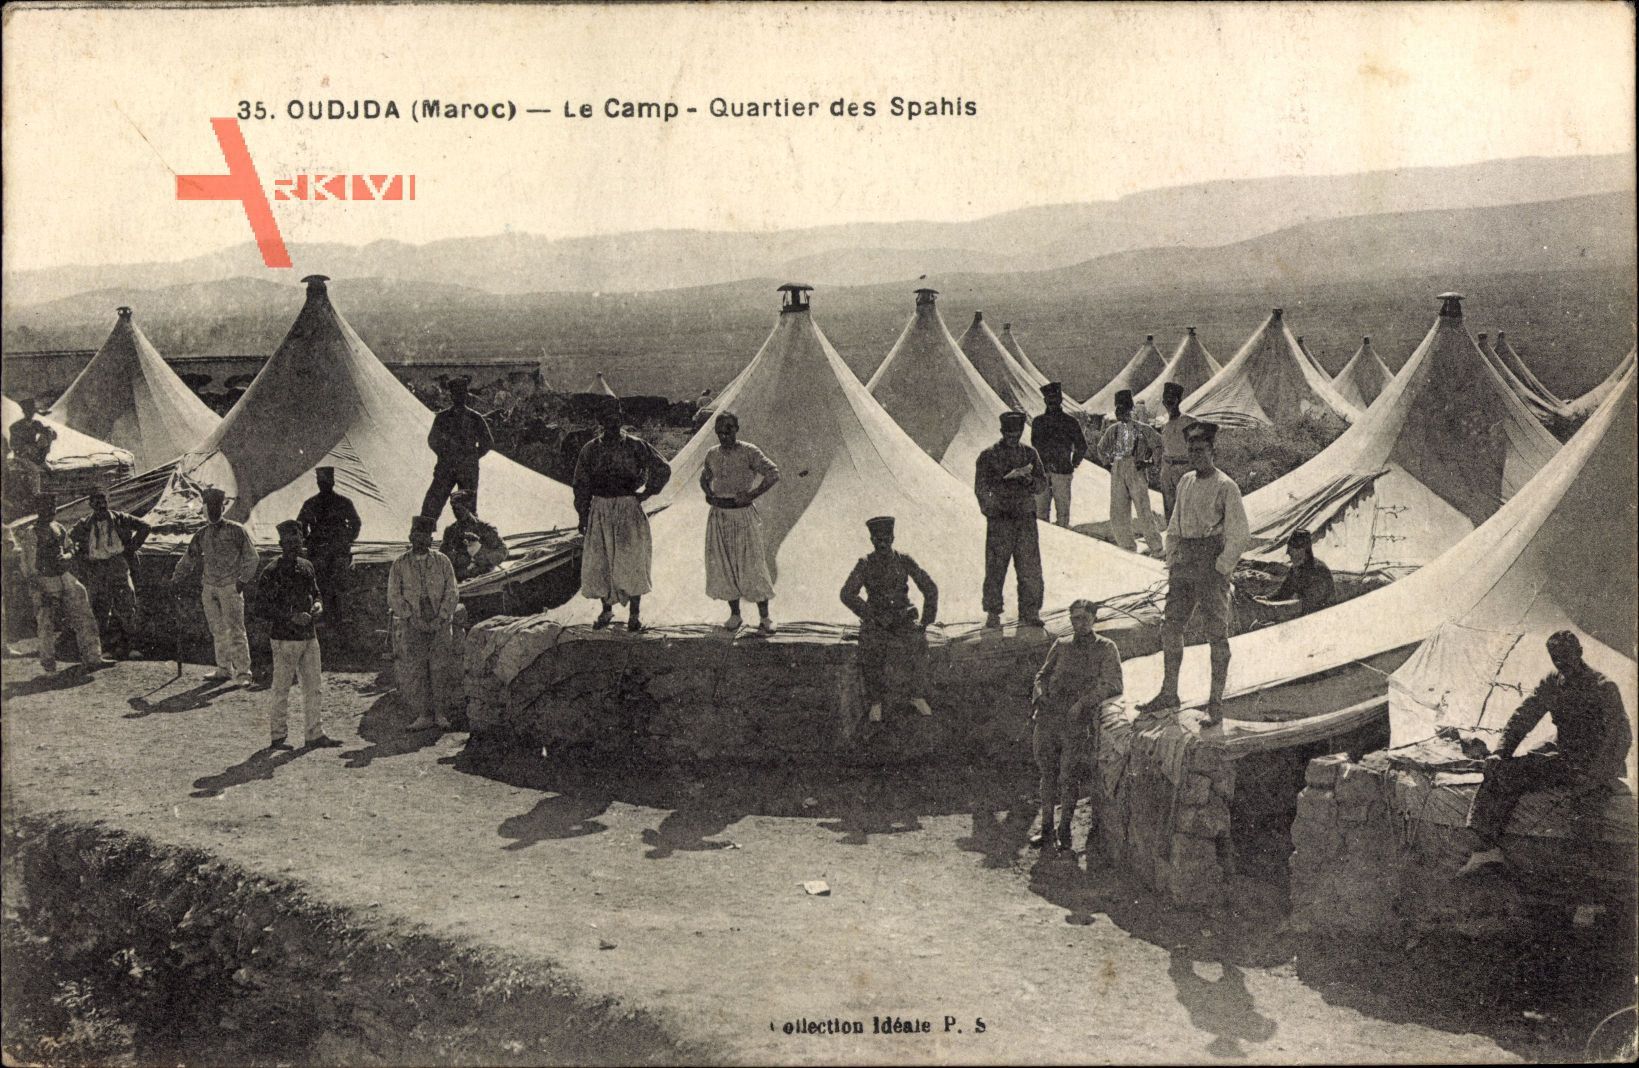 Oudjda Oujda Marokko, Le Camp, Quartier des Spahis, Zelte und Soldaten